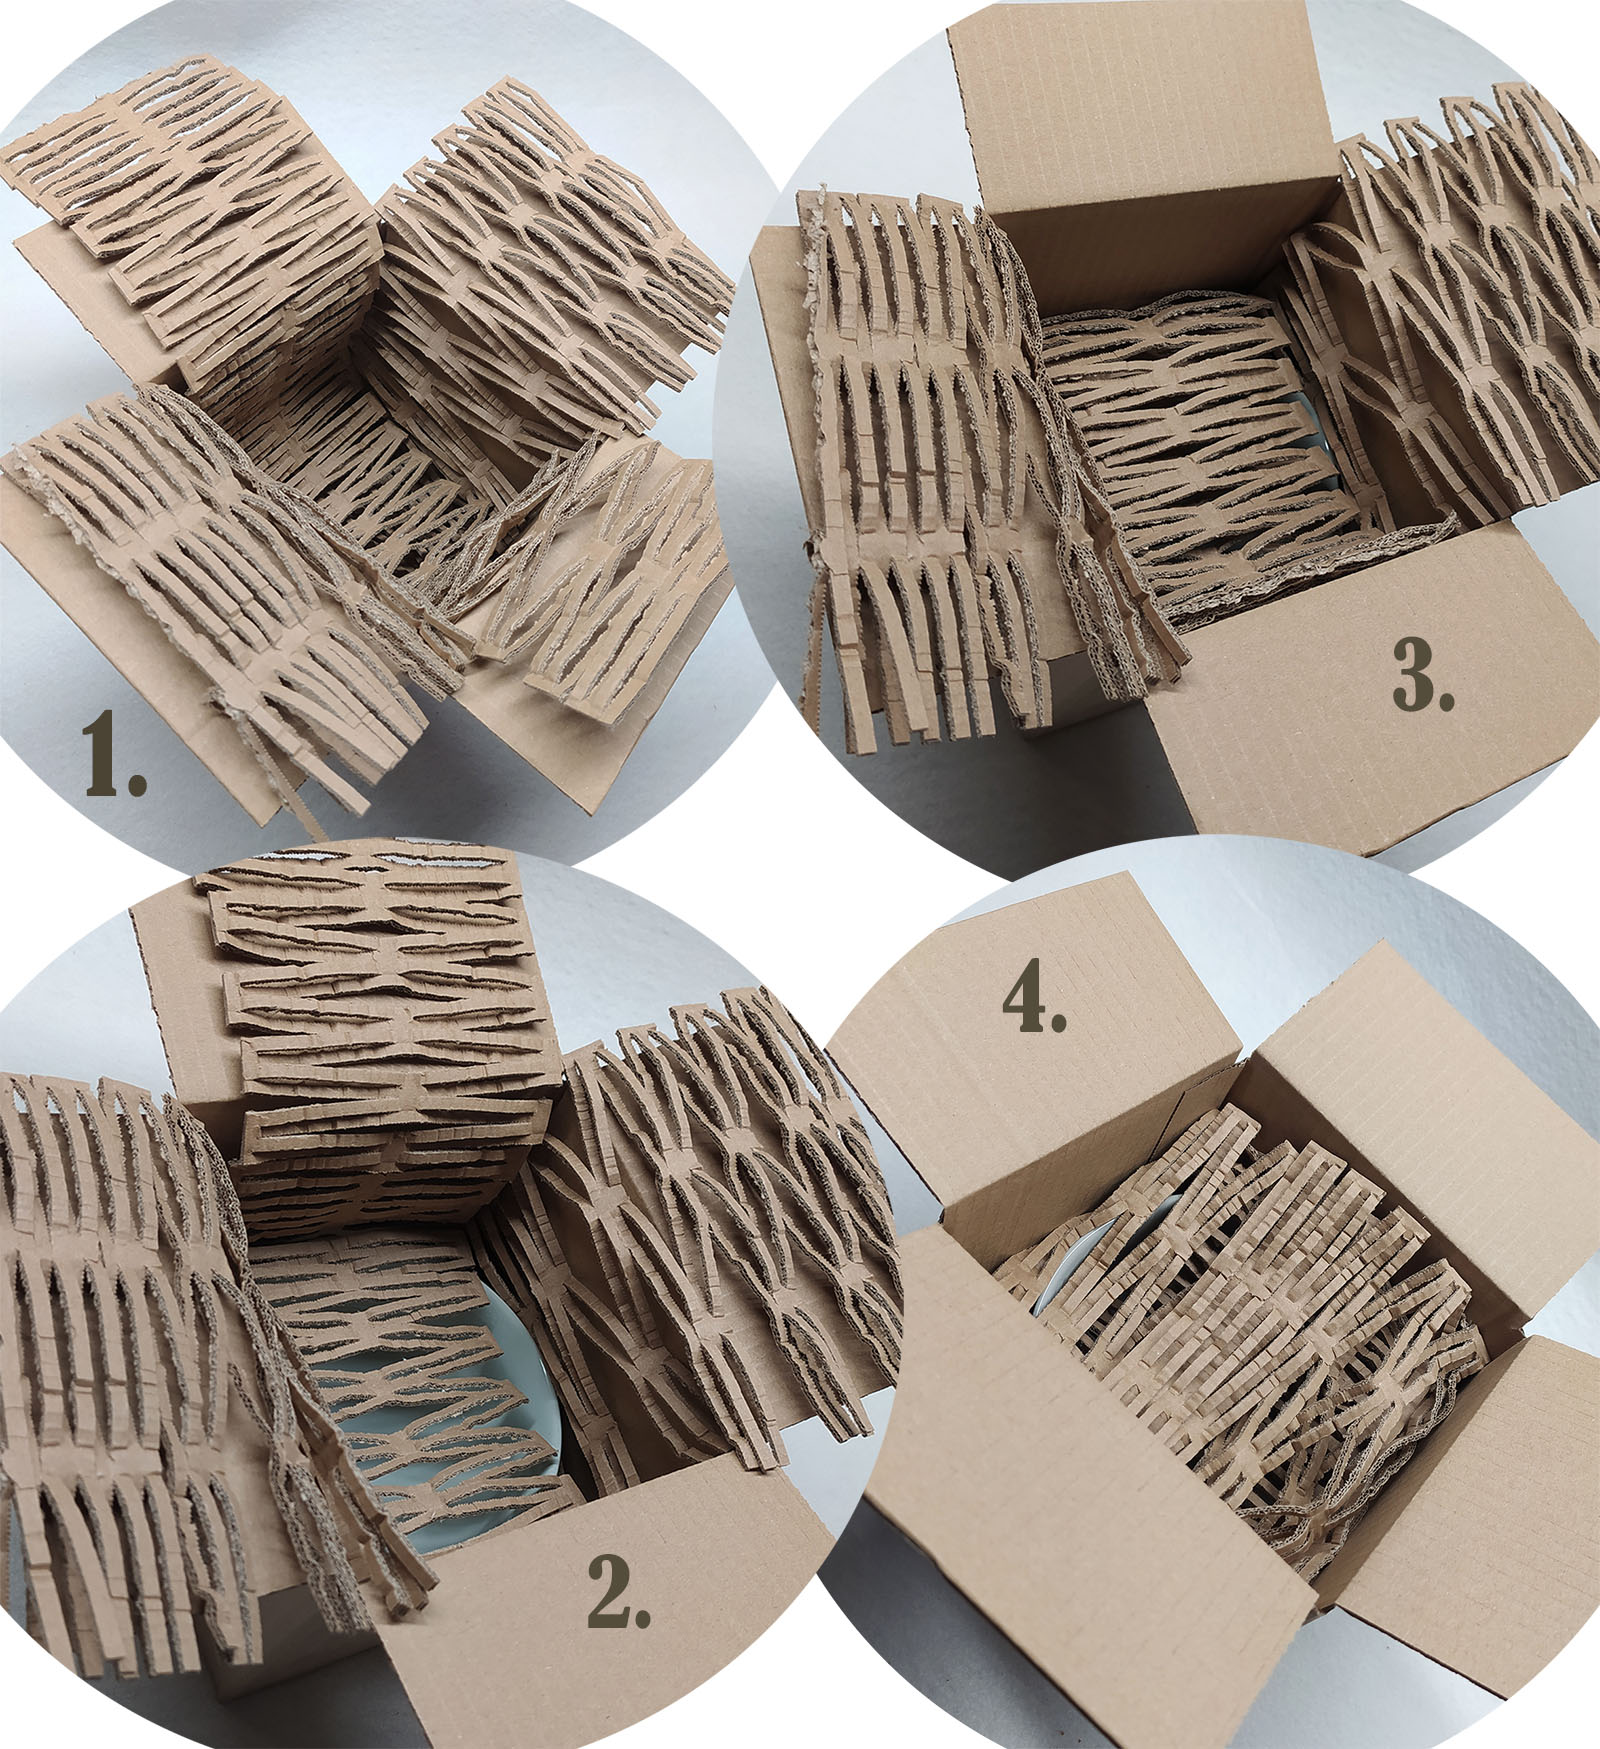 125 liters cardboard shredder upholstery mats packaging material